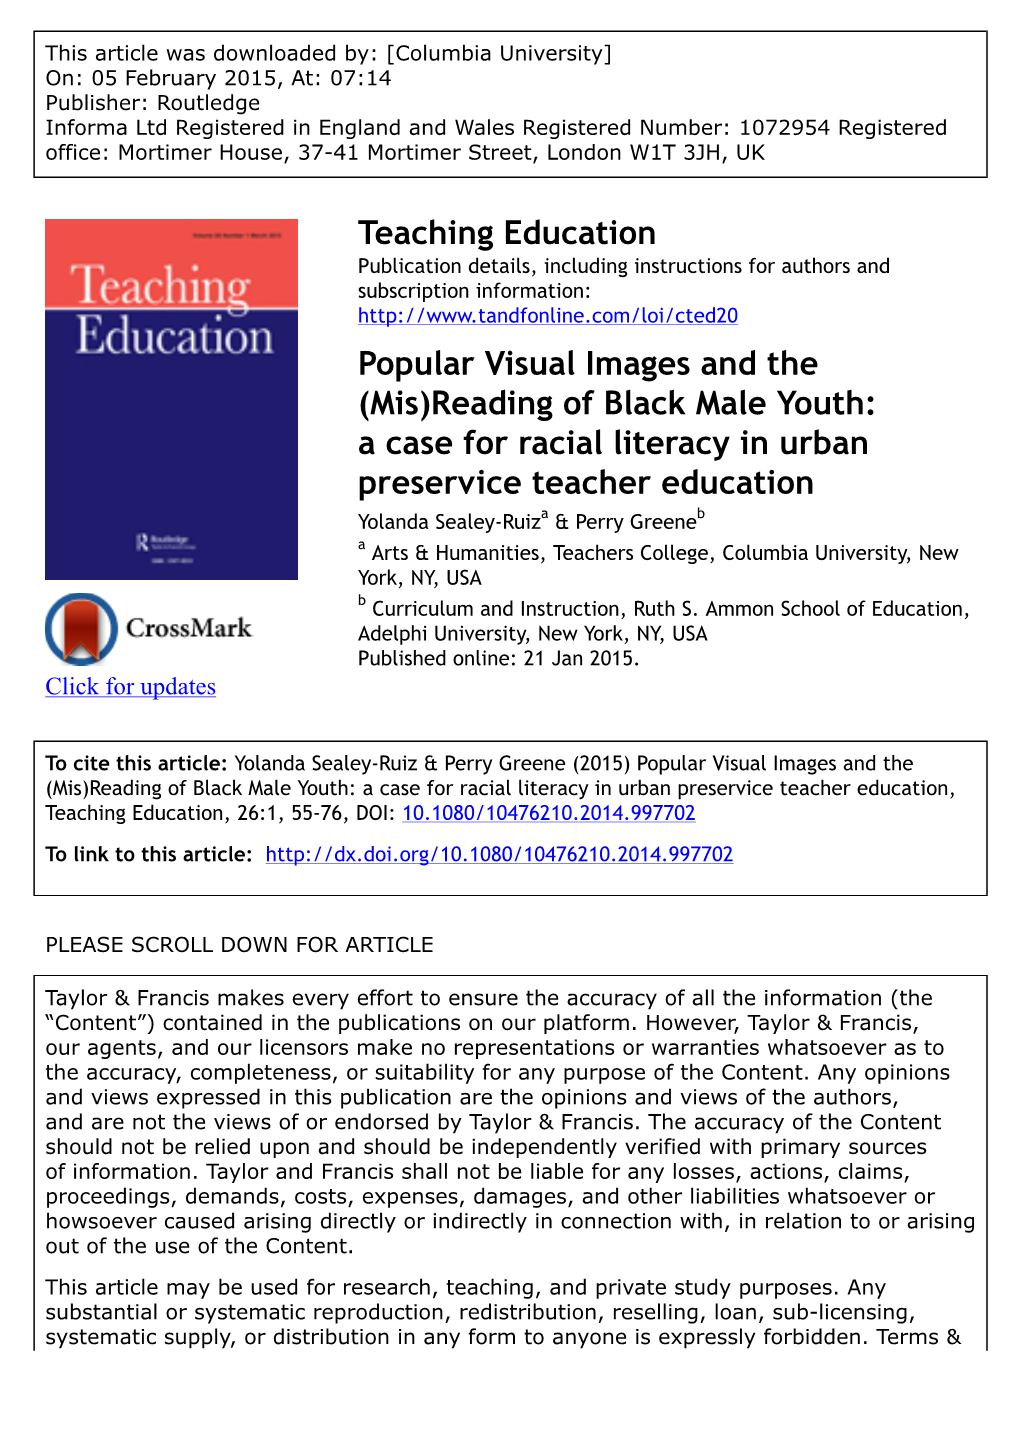 A Case for Racial Literacy in Urban Preservice Teacher Education